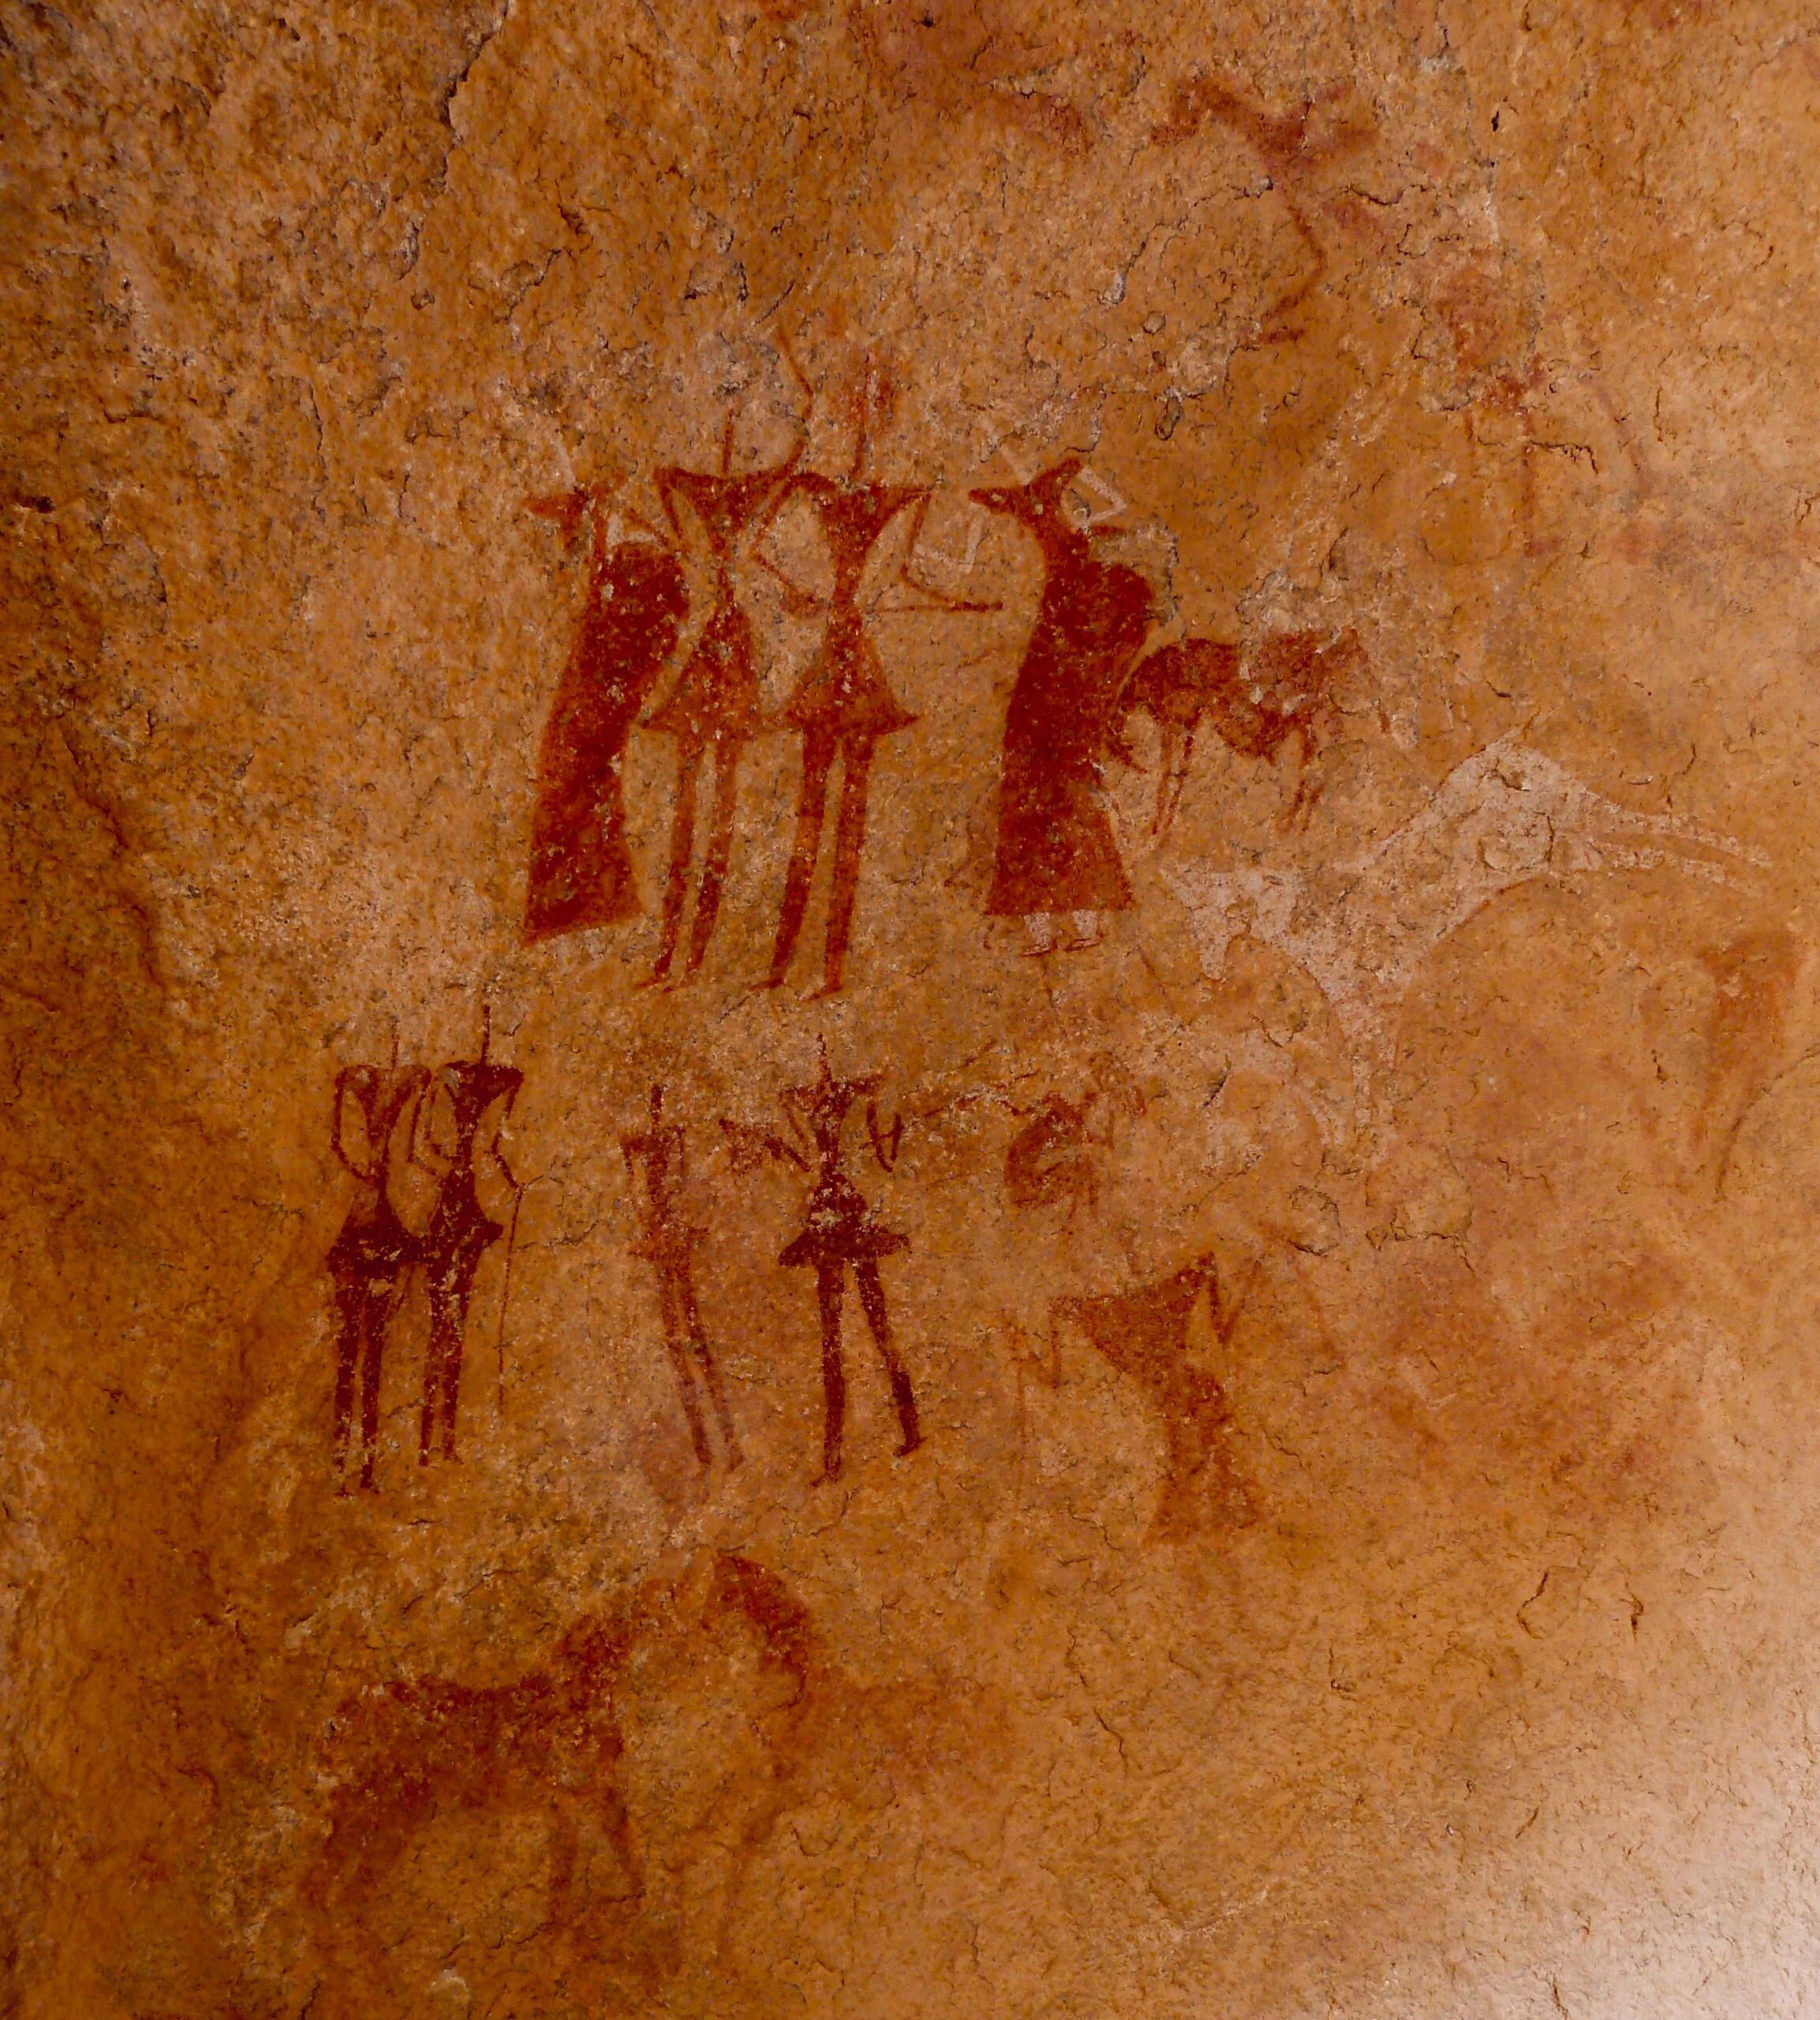 mini jupe in the algerian Sahara (Mertoutek, near Tamanrasset) , 6000 yaers old, prehistoric painting - photo made by rouichi / switzerland by azzedine rouichi unsplash